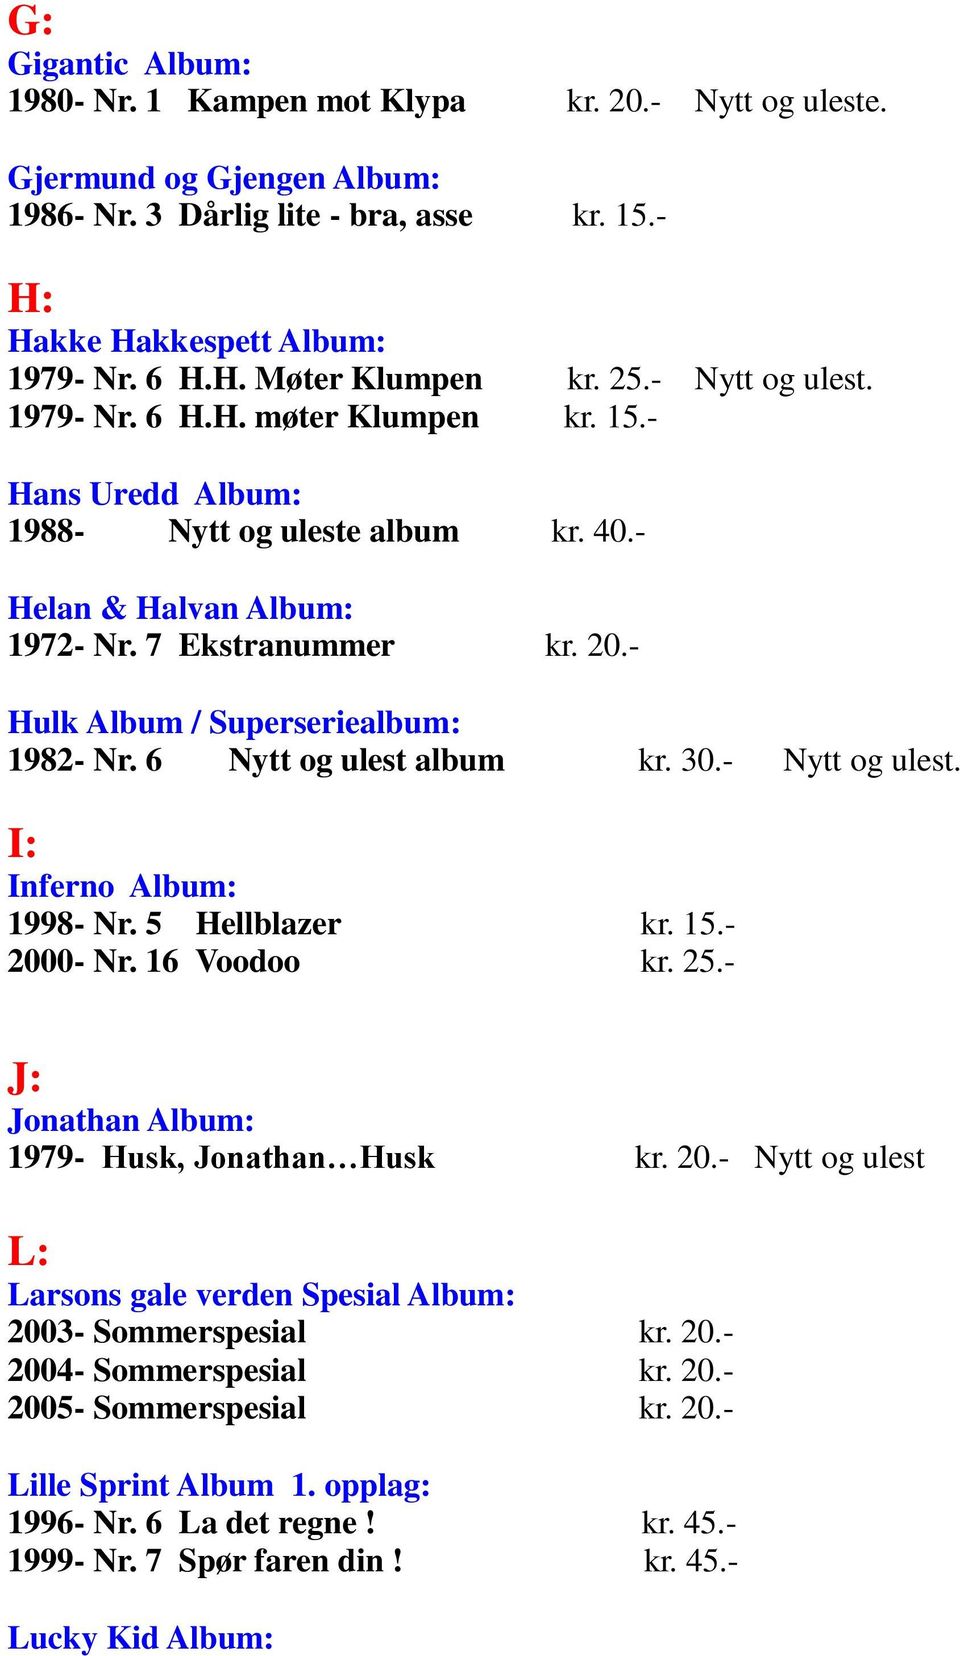 - Hulk Album / Superseriealbum: 1982- Nr. 6 Nytt og ulest album kr. 30.- Nytt og ulest. I: Inferno Album: 1998- Nr. 5 Hellblazer kr. 15.- 2000- Nr. 16 Voodoo kr. 25.